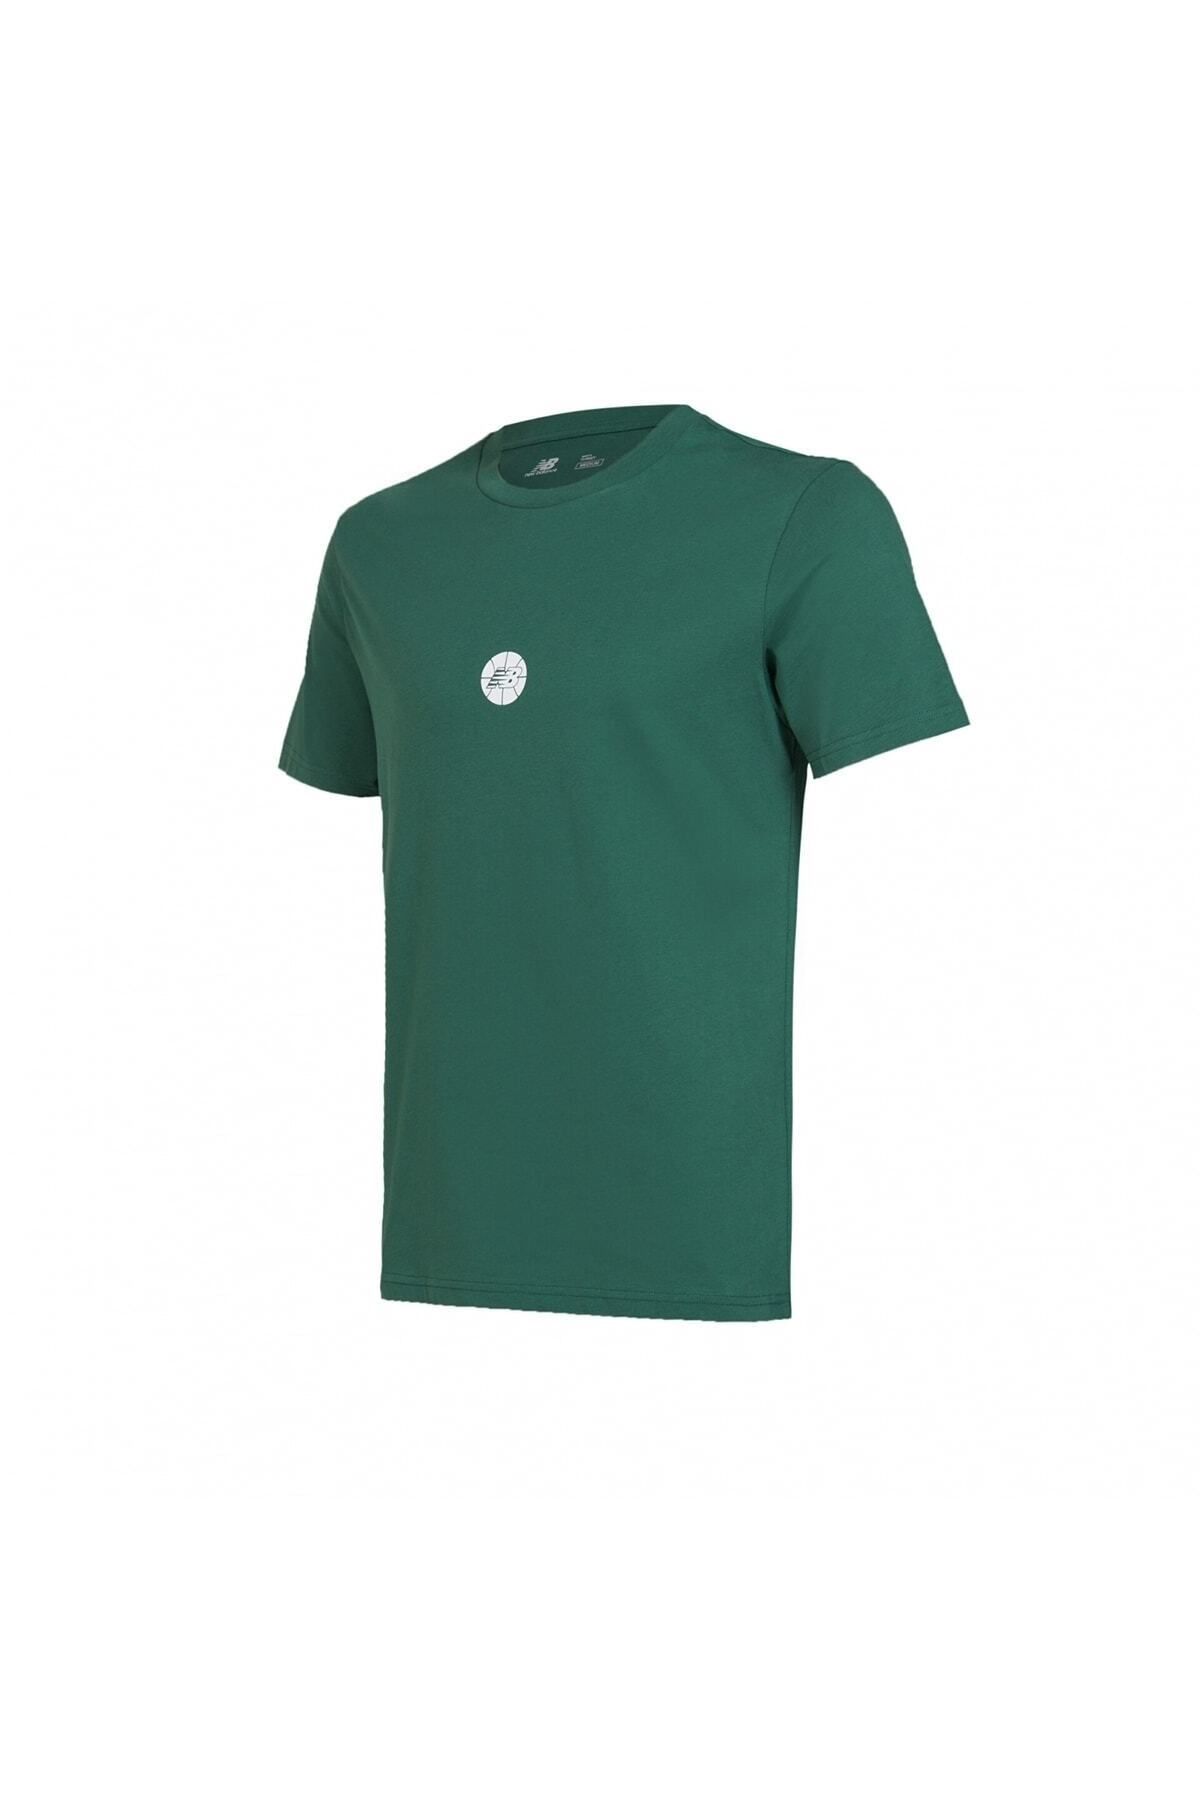 New Balance Lifestyle Yeşil Erkek Tişört Mnt1343-grn